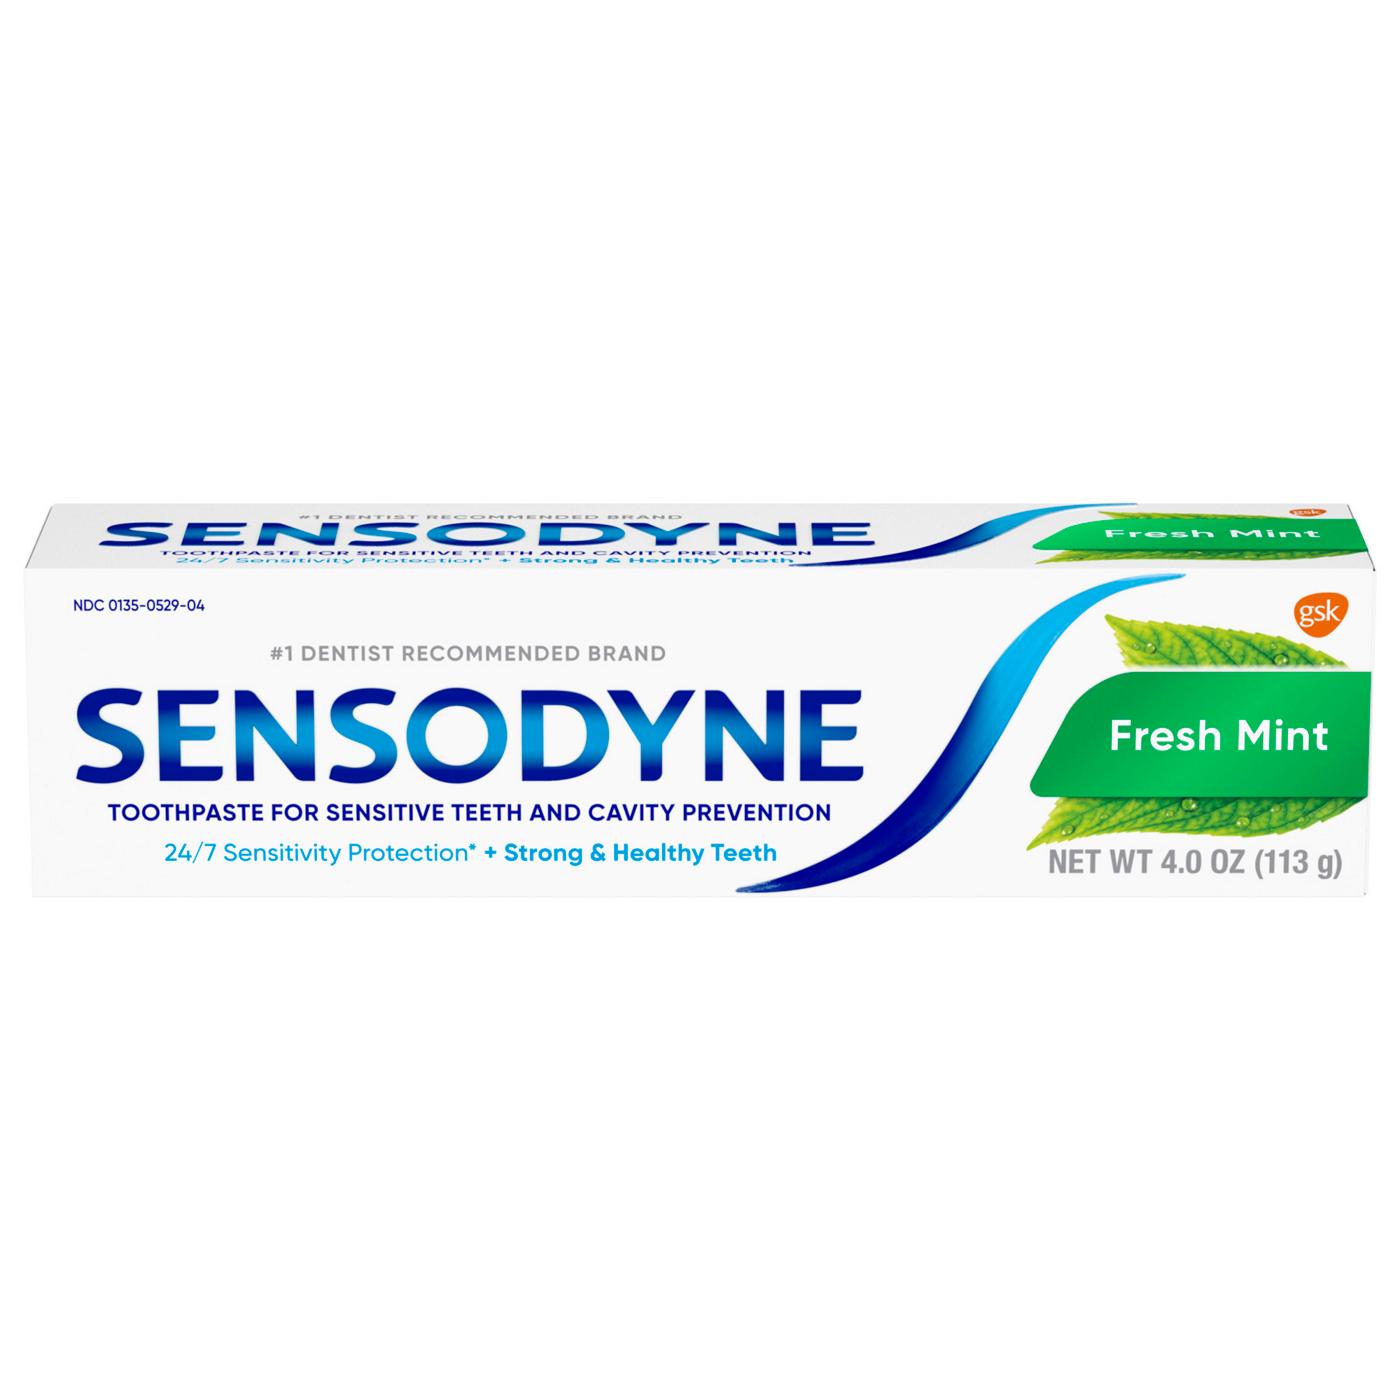 Sensodyne Sensitive Toothpaste - Fresh Mint; image 1 of 8